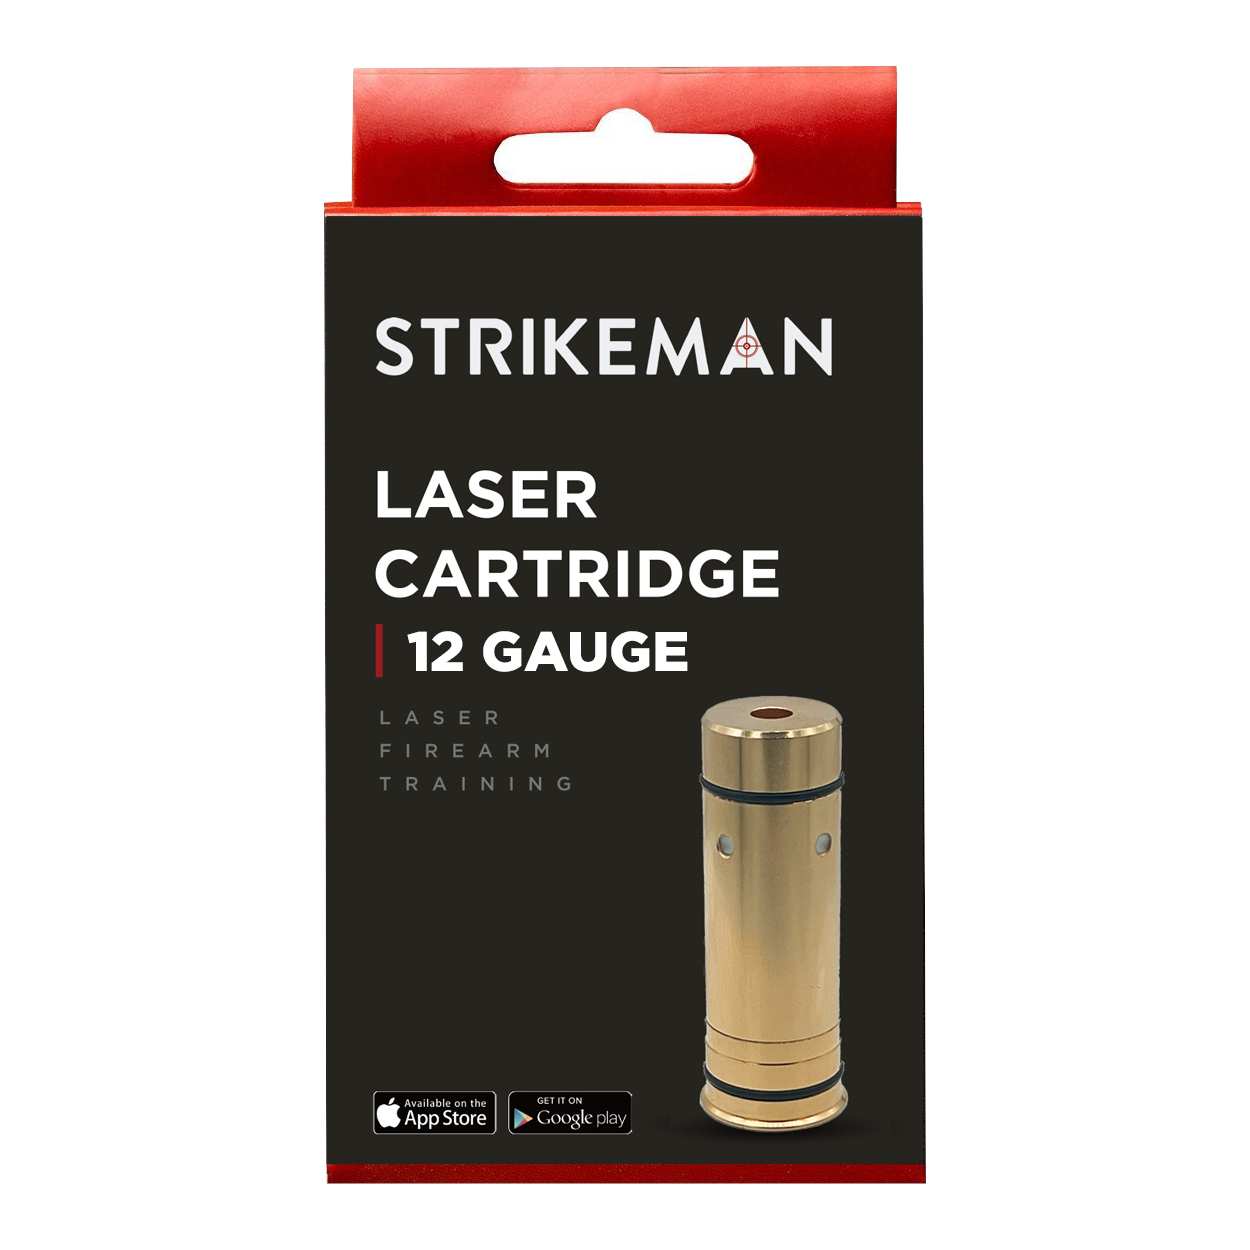 Strikeman - 12 Gauge Laser Cartridge Ammo Bullet